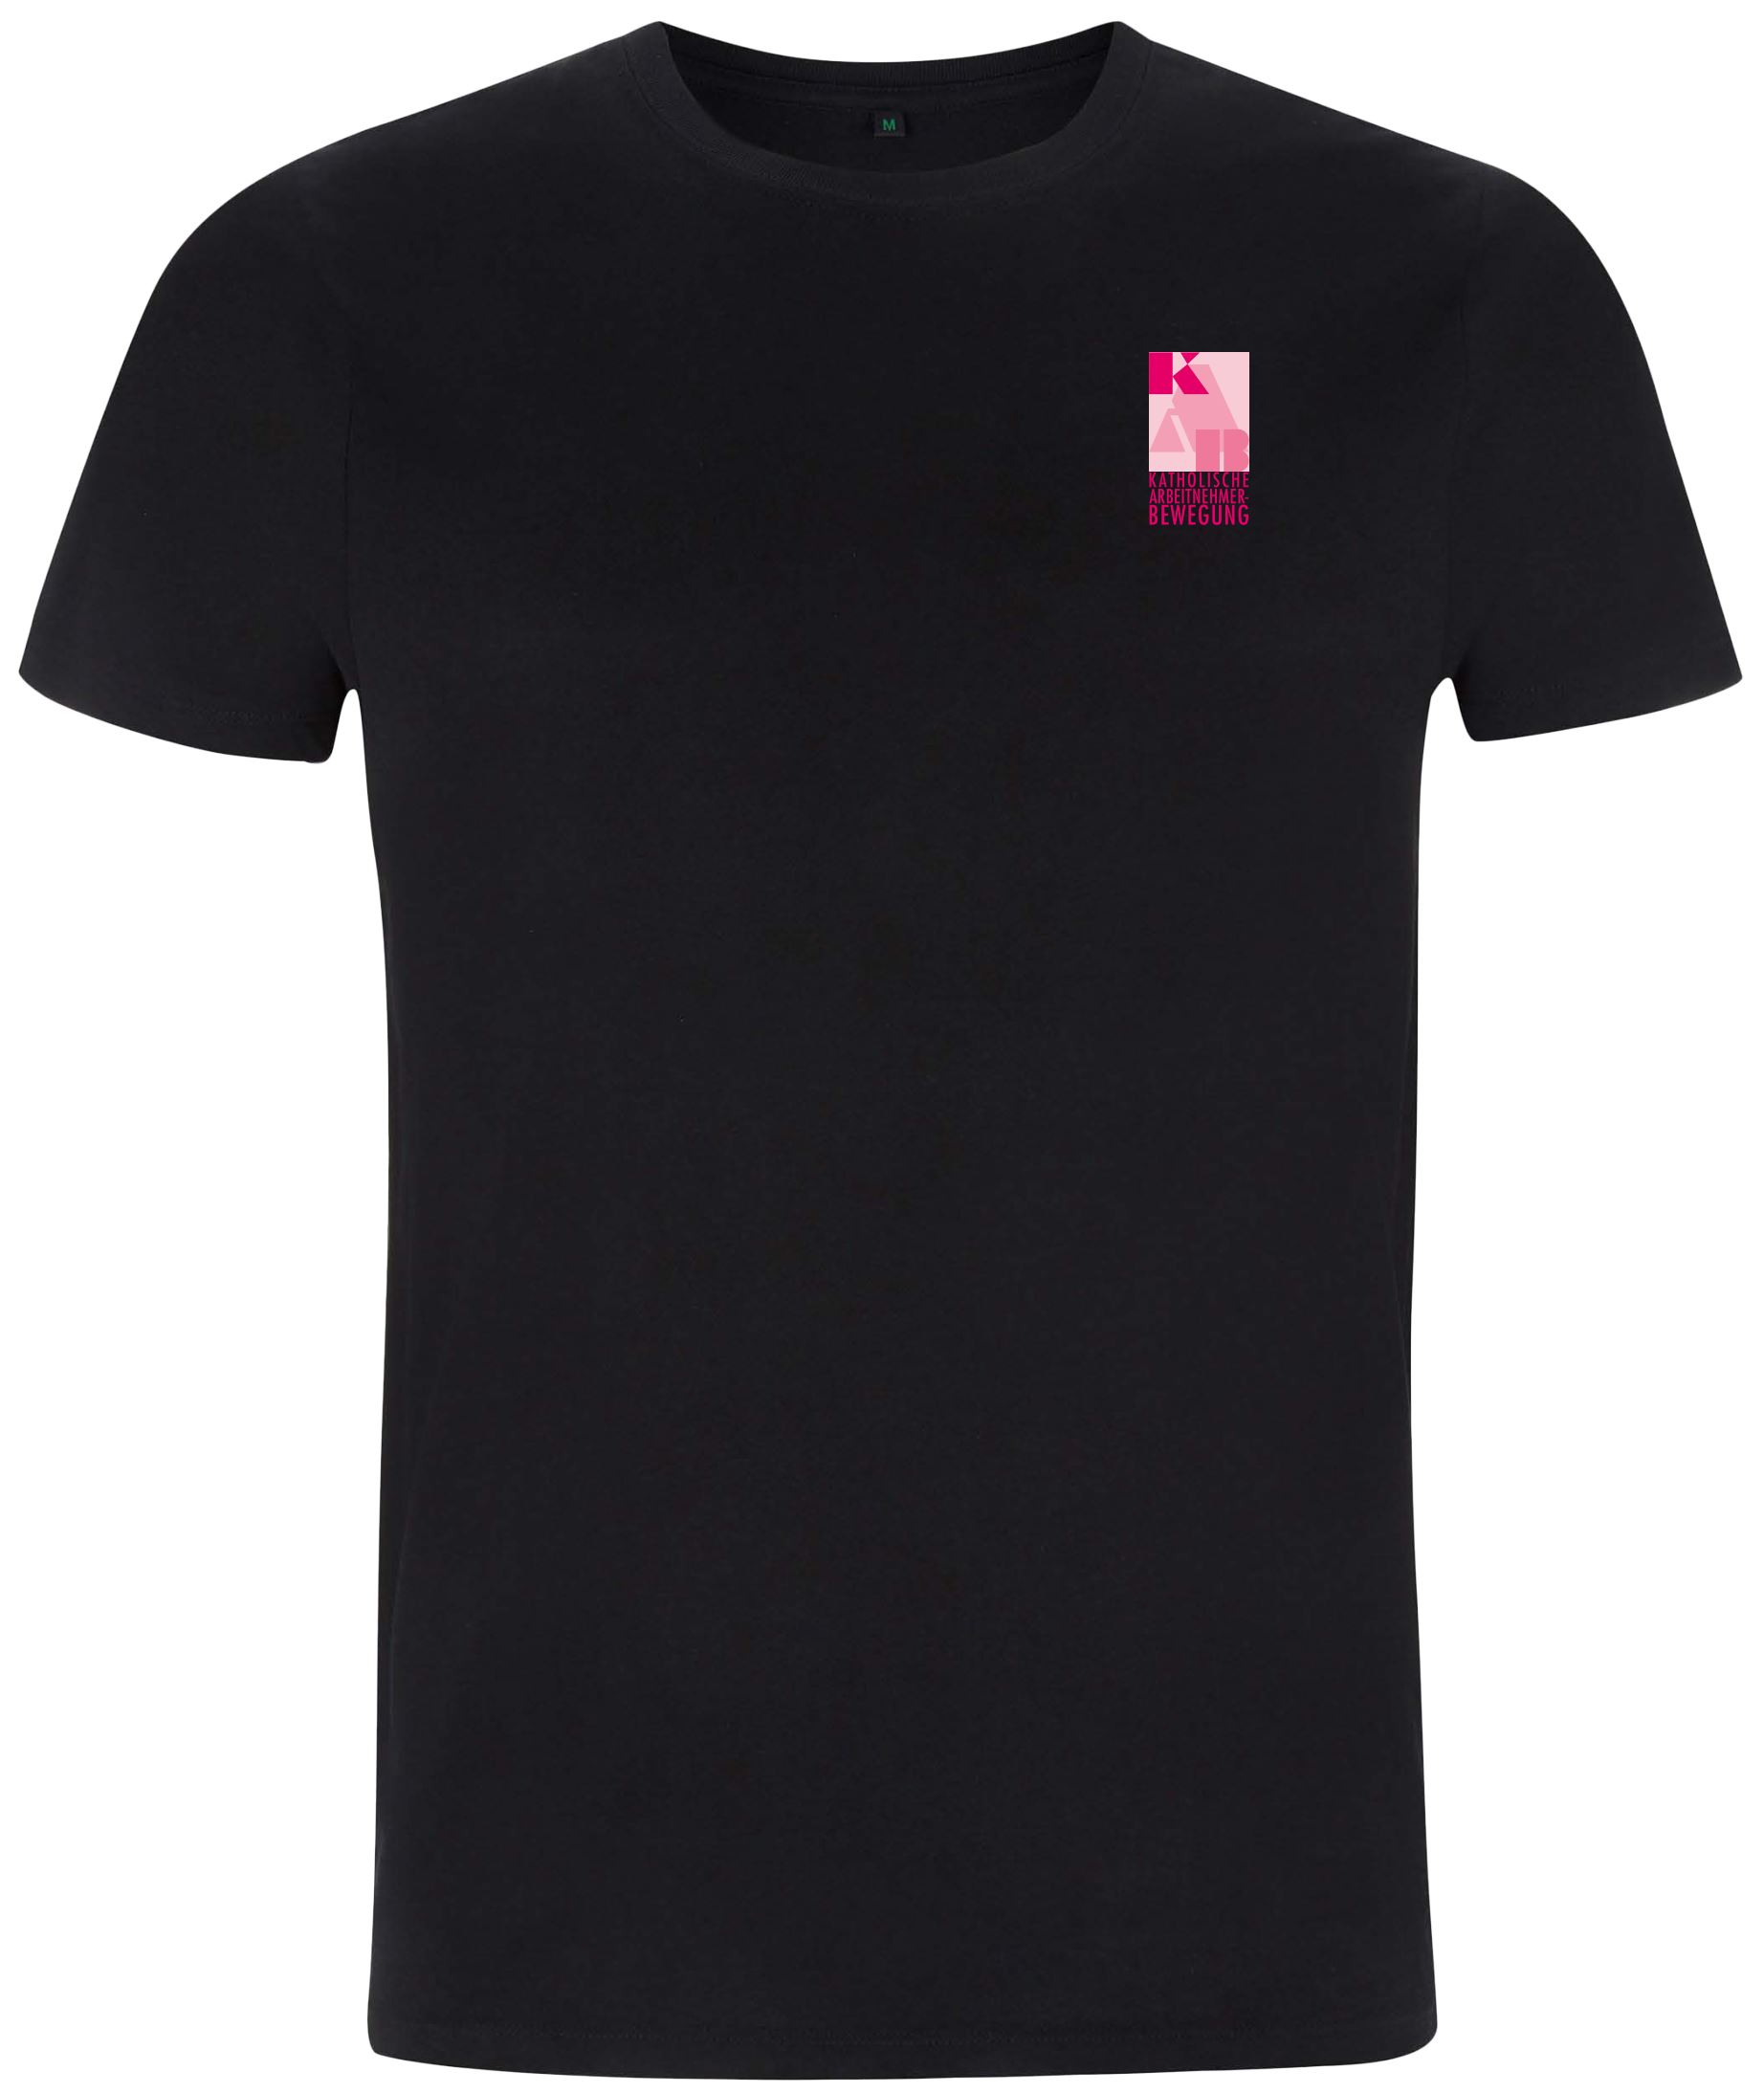 KAB T-Shirt schwarz mit Kampagnenmotiv Gr. XXL